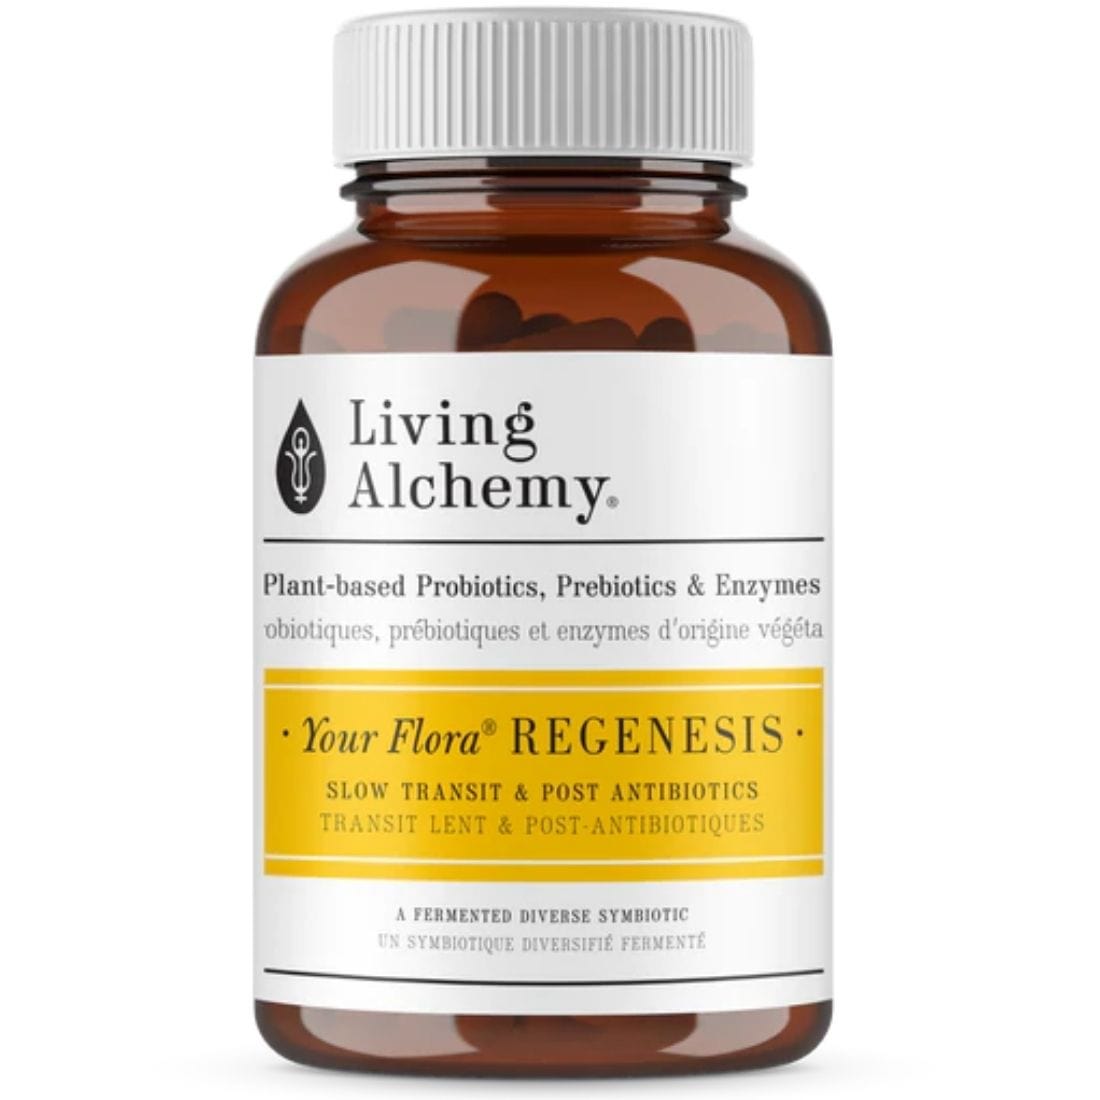 Living Alchemy Your Flora Regenesis, Rebuild gut flora after antibiotics, Slow/infrequent bowl movements